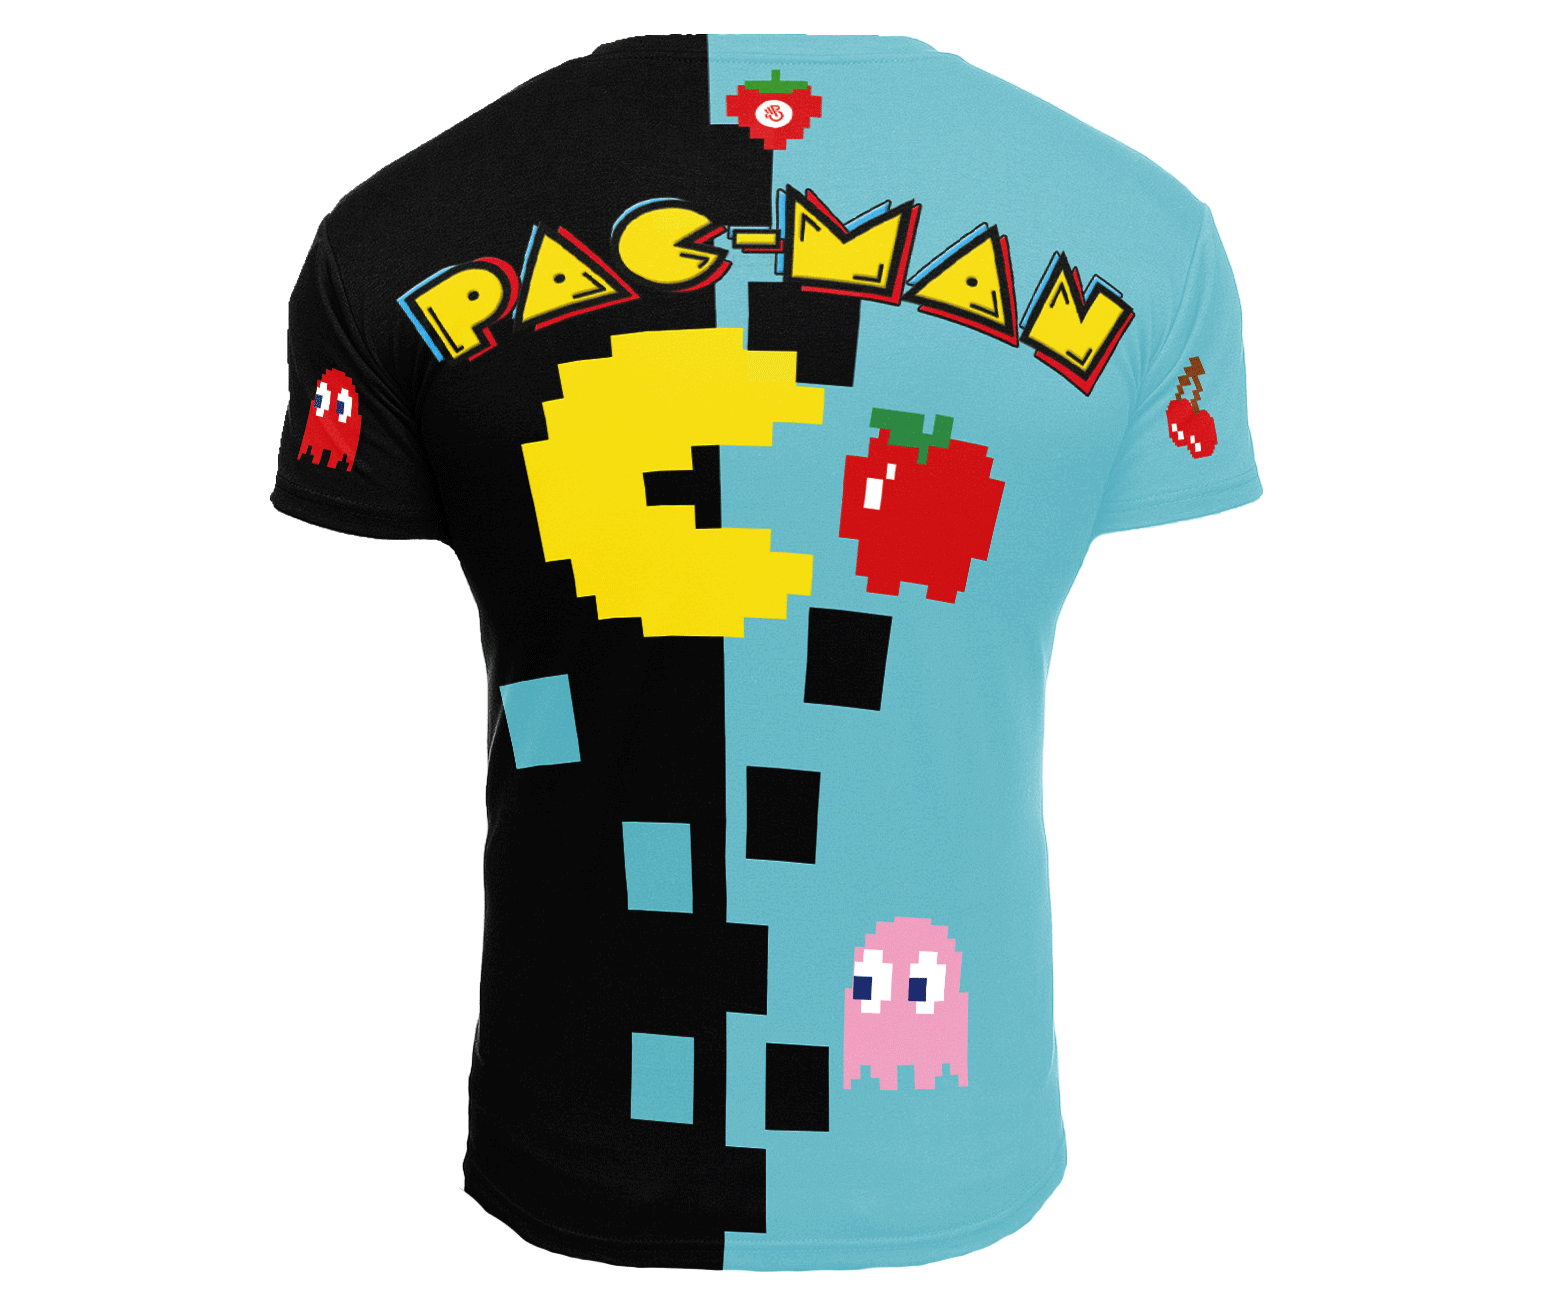 Training T-shirt PAC-MAN image 2